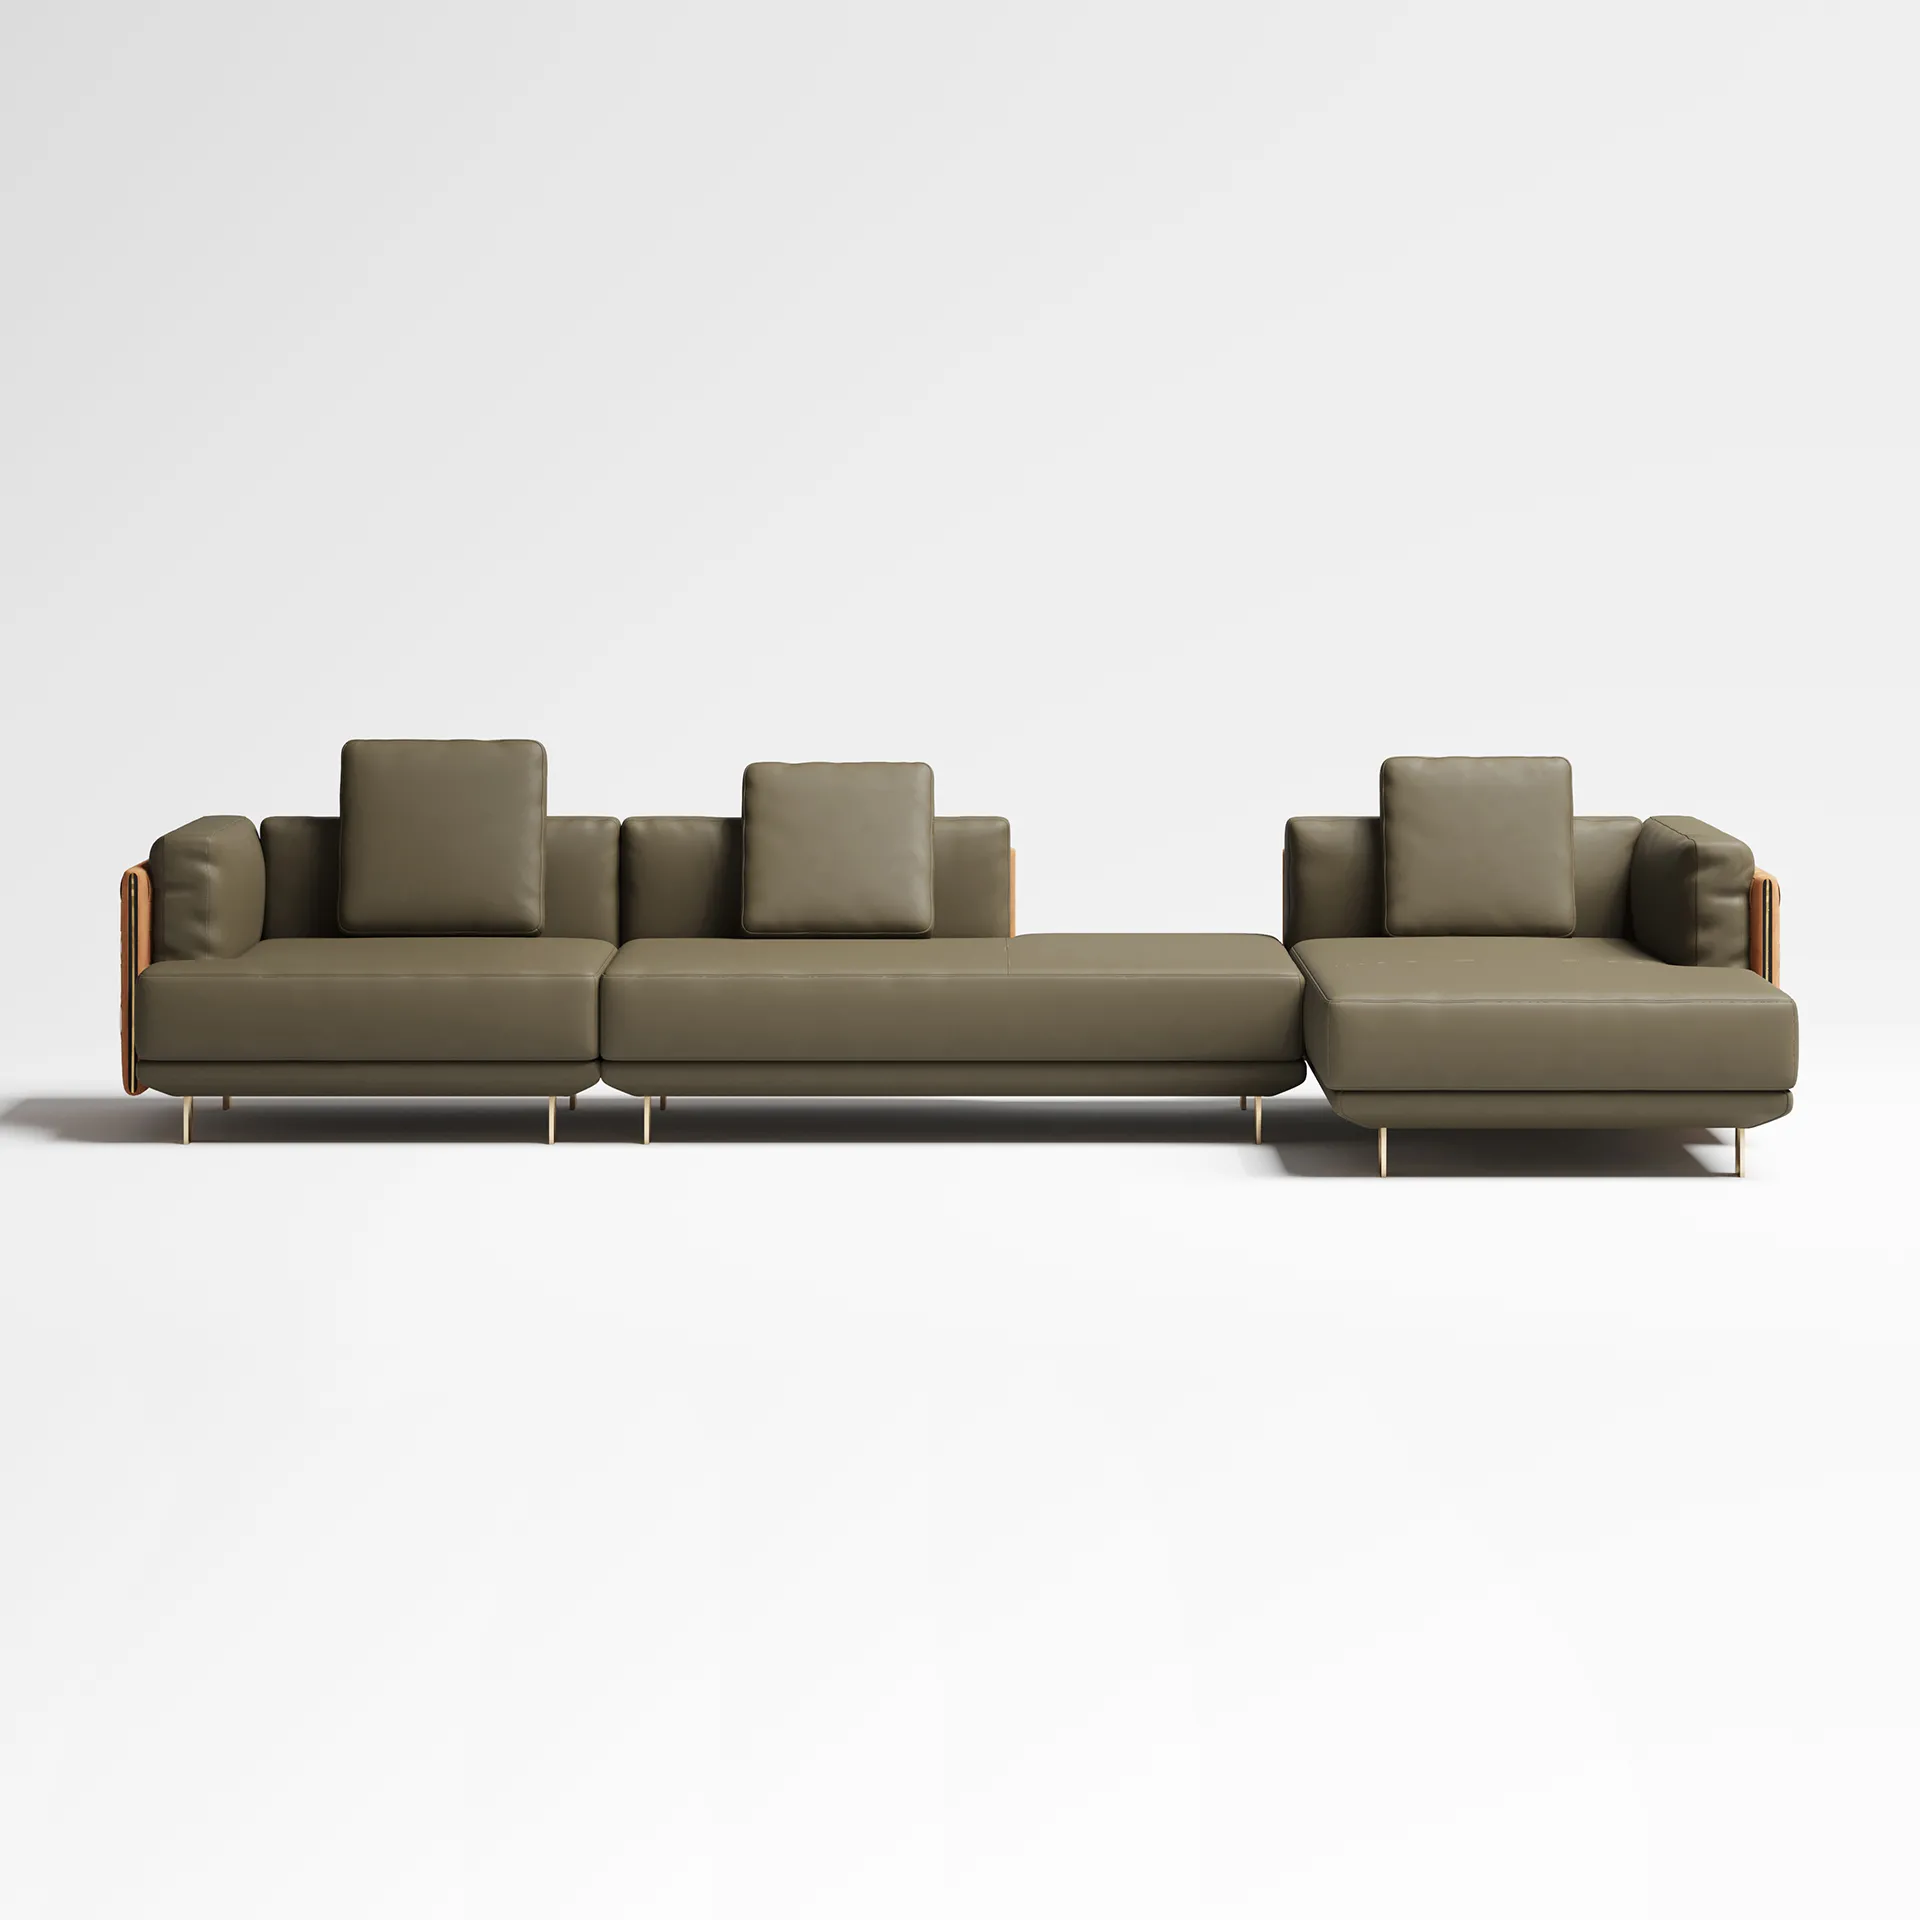 3ds Max Files – Model – 18 – Sofa Model – 16 – Sofa Model by Phong Ngu